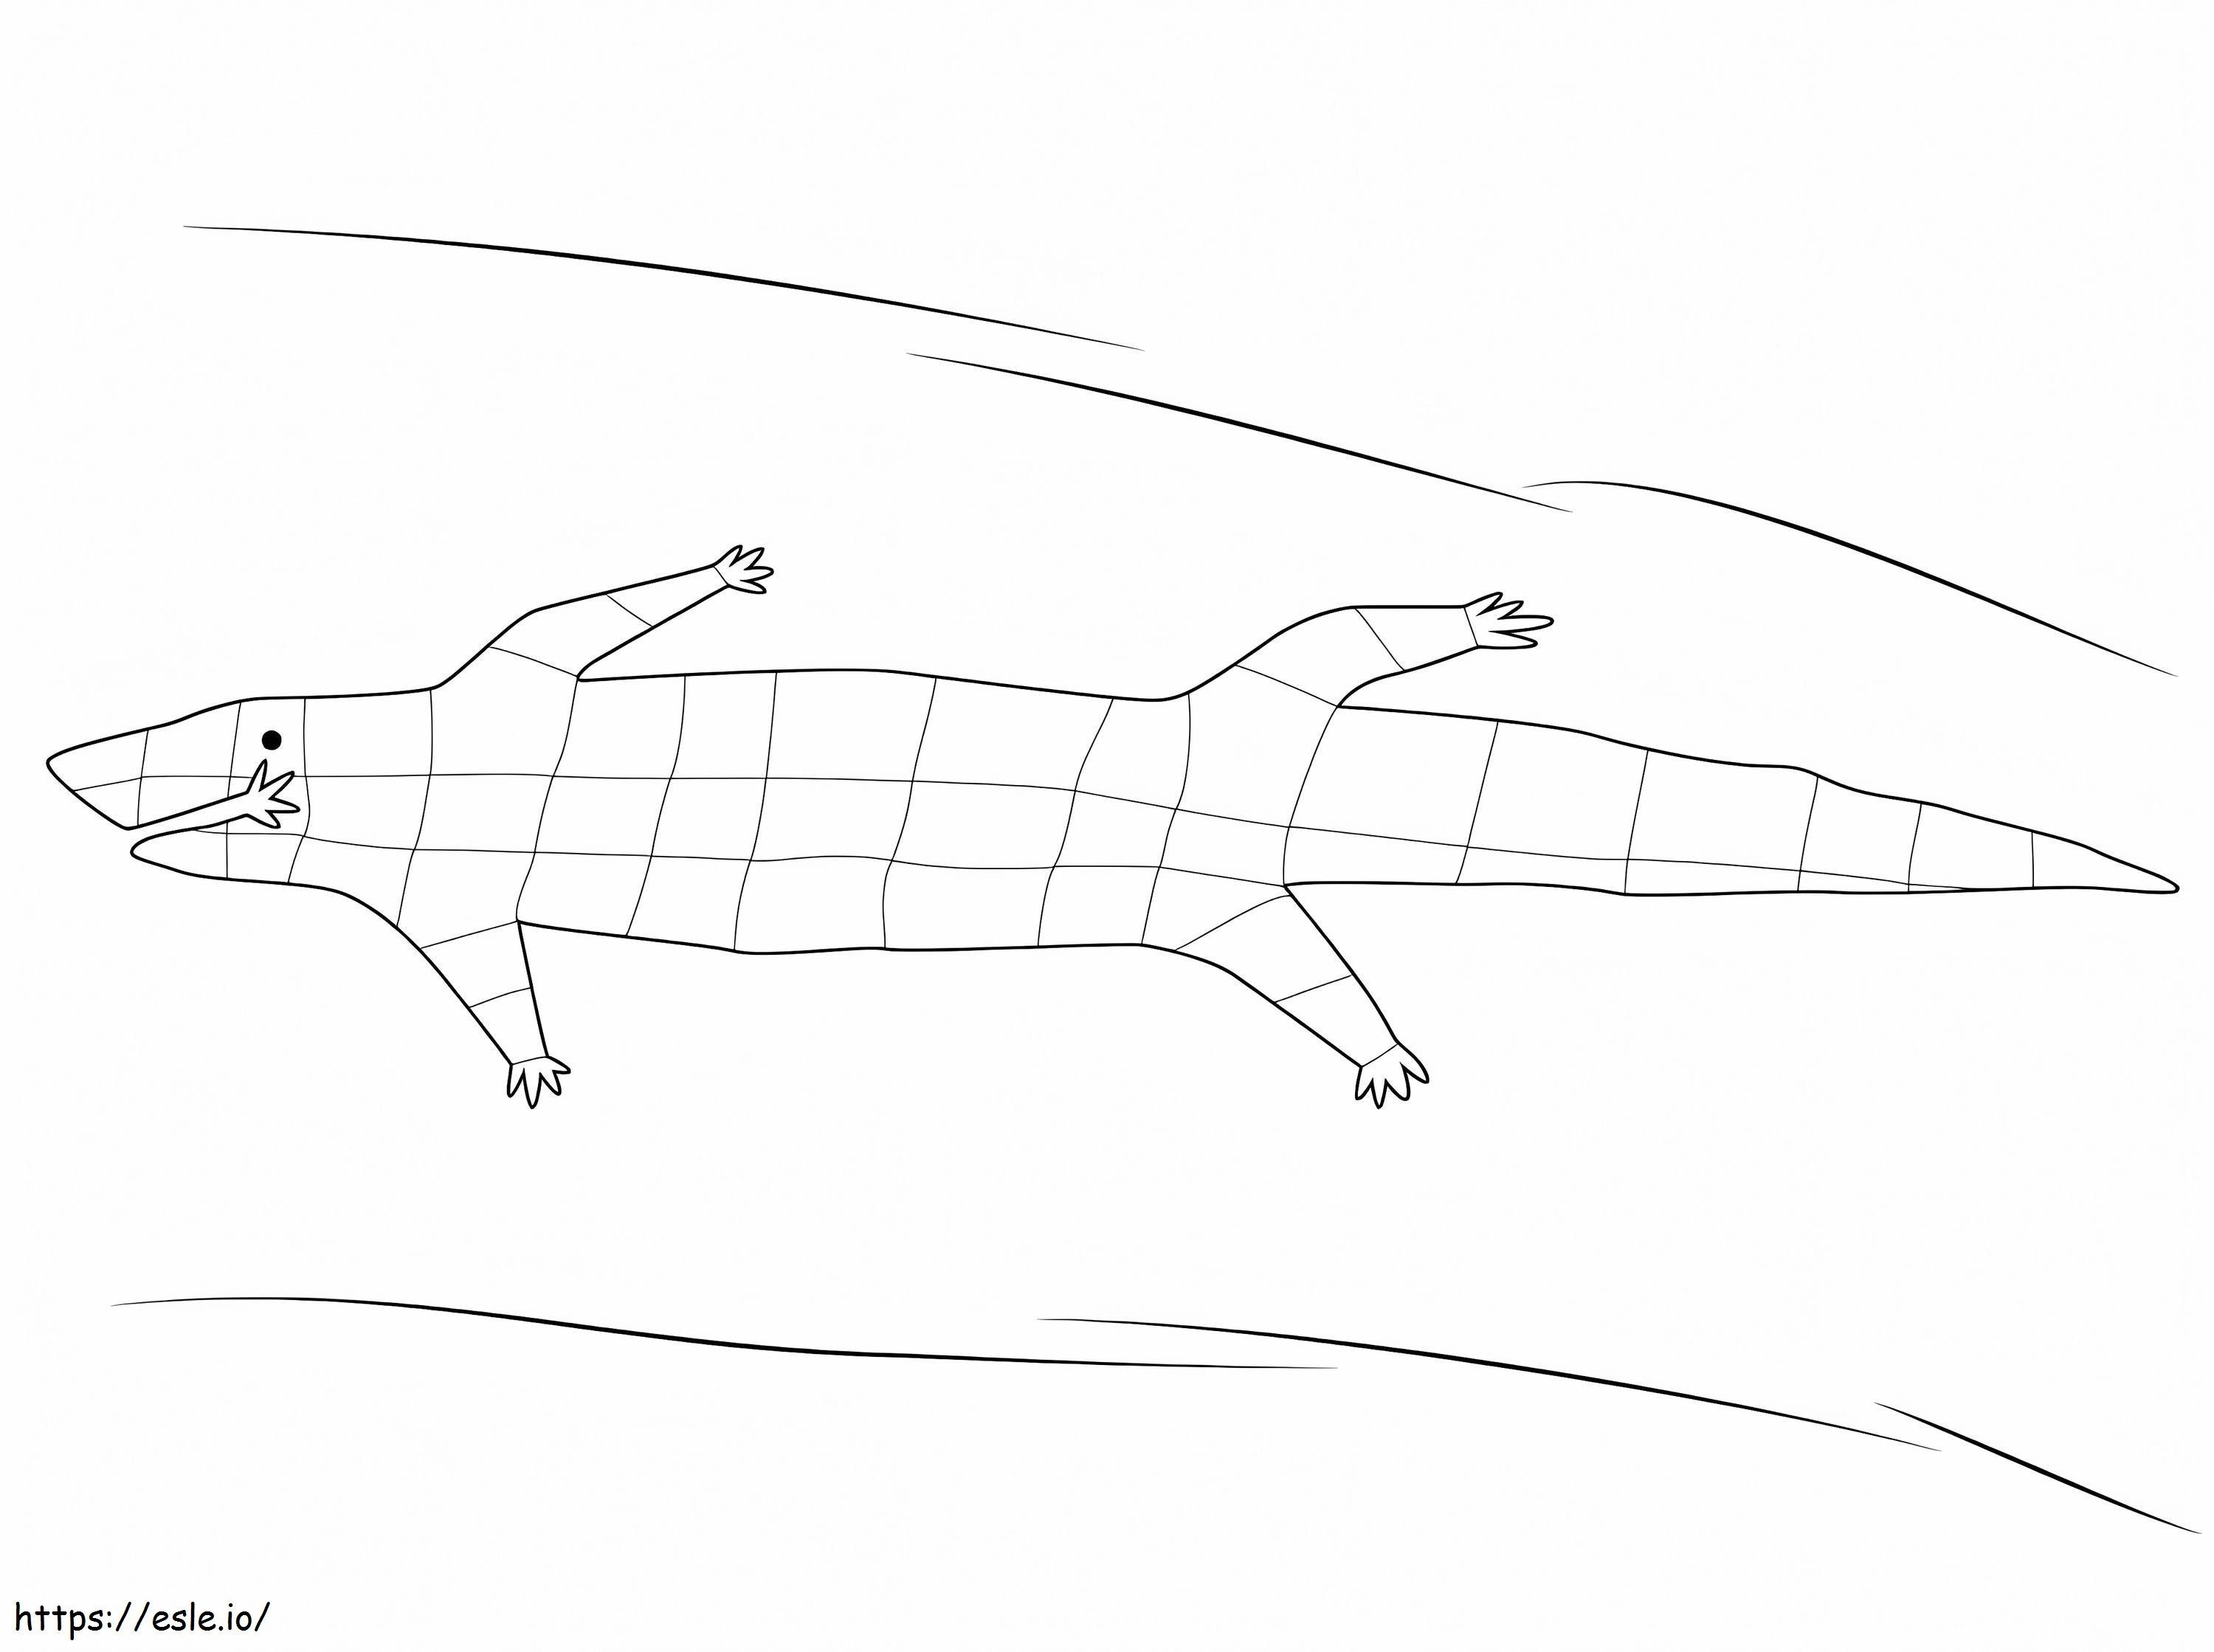 Coloriage Crocodile autochtone à imprimer dessin